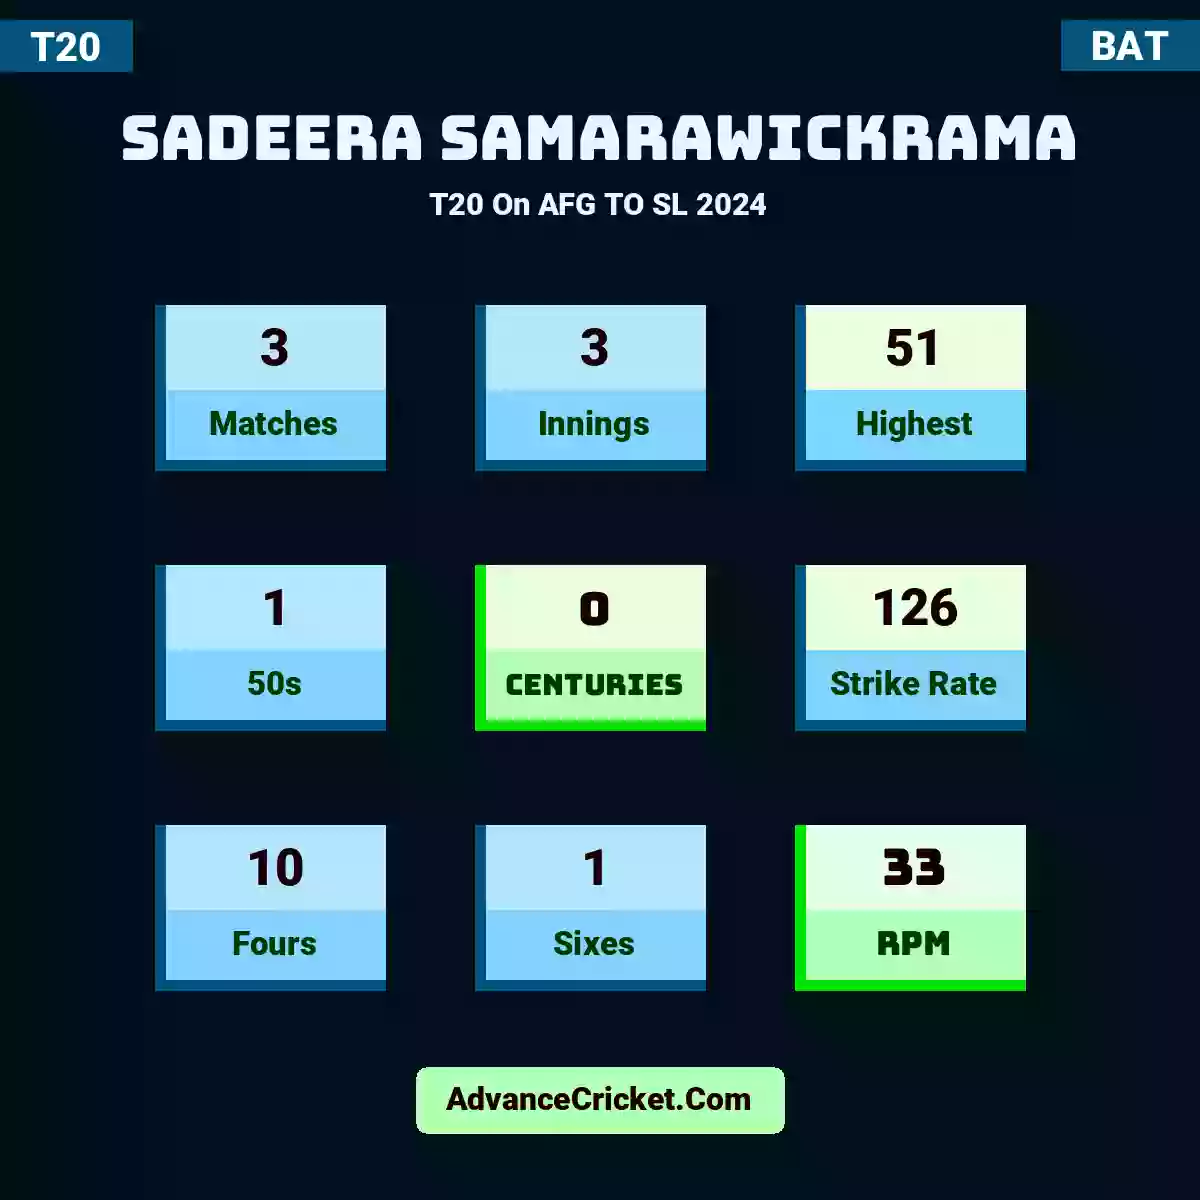 Sadeera Samarawickrama T20  On AFG TO SL 2024, Sadeera Samarawickrama played 3 matches, scored 51 runs as highest, 1 half-centuries, and 0 centuries, with a strike rate of 126. S.Samarawickrama hit 10 fours and 1 sixes, with an RPM of 33.